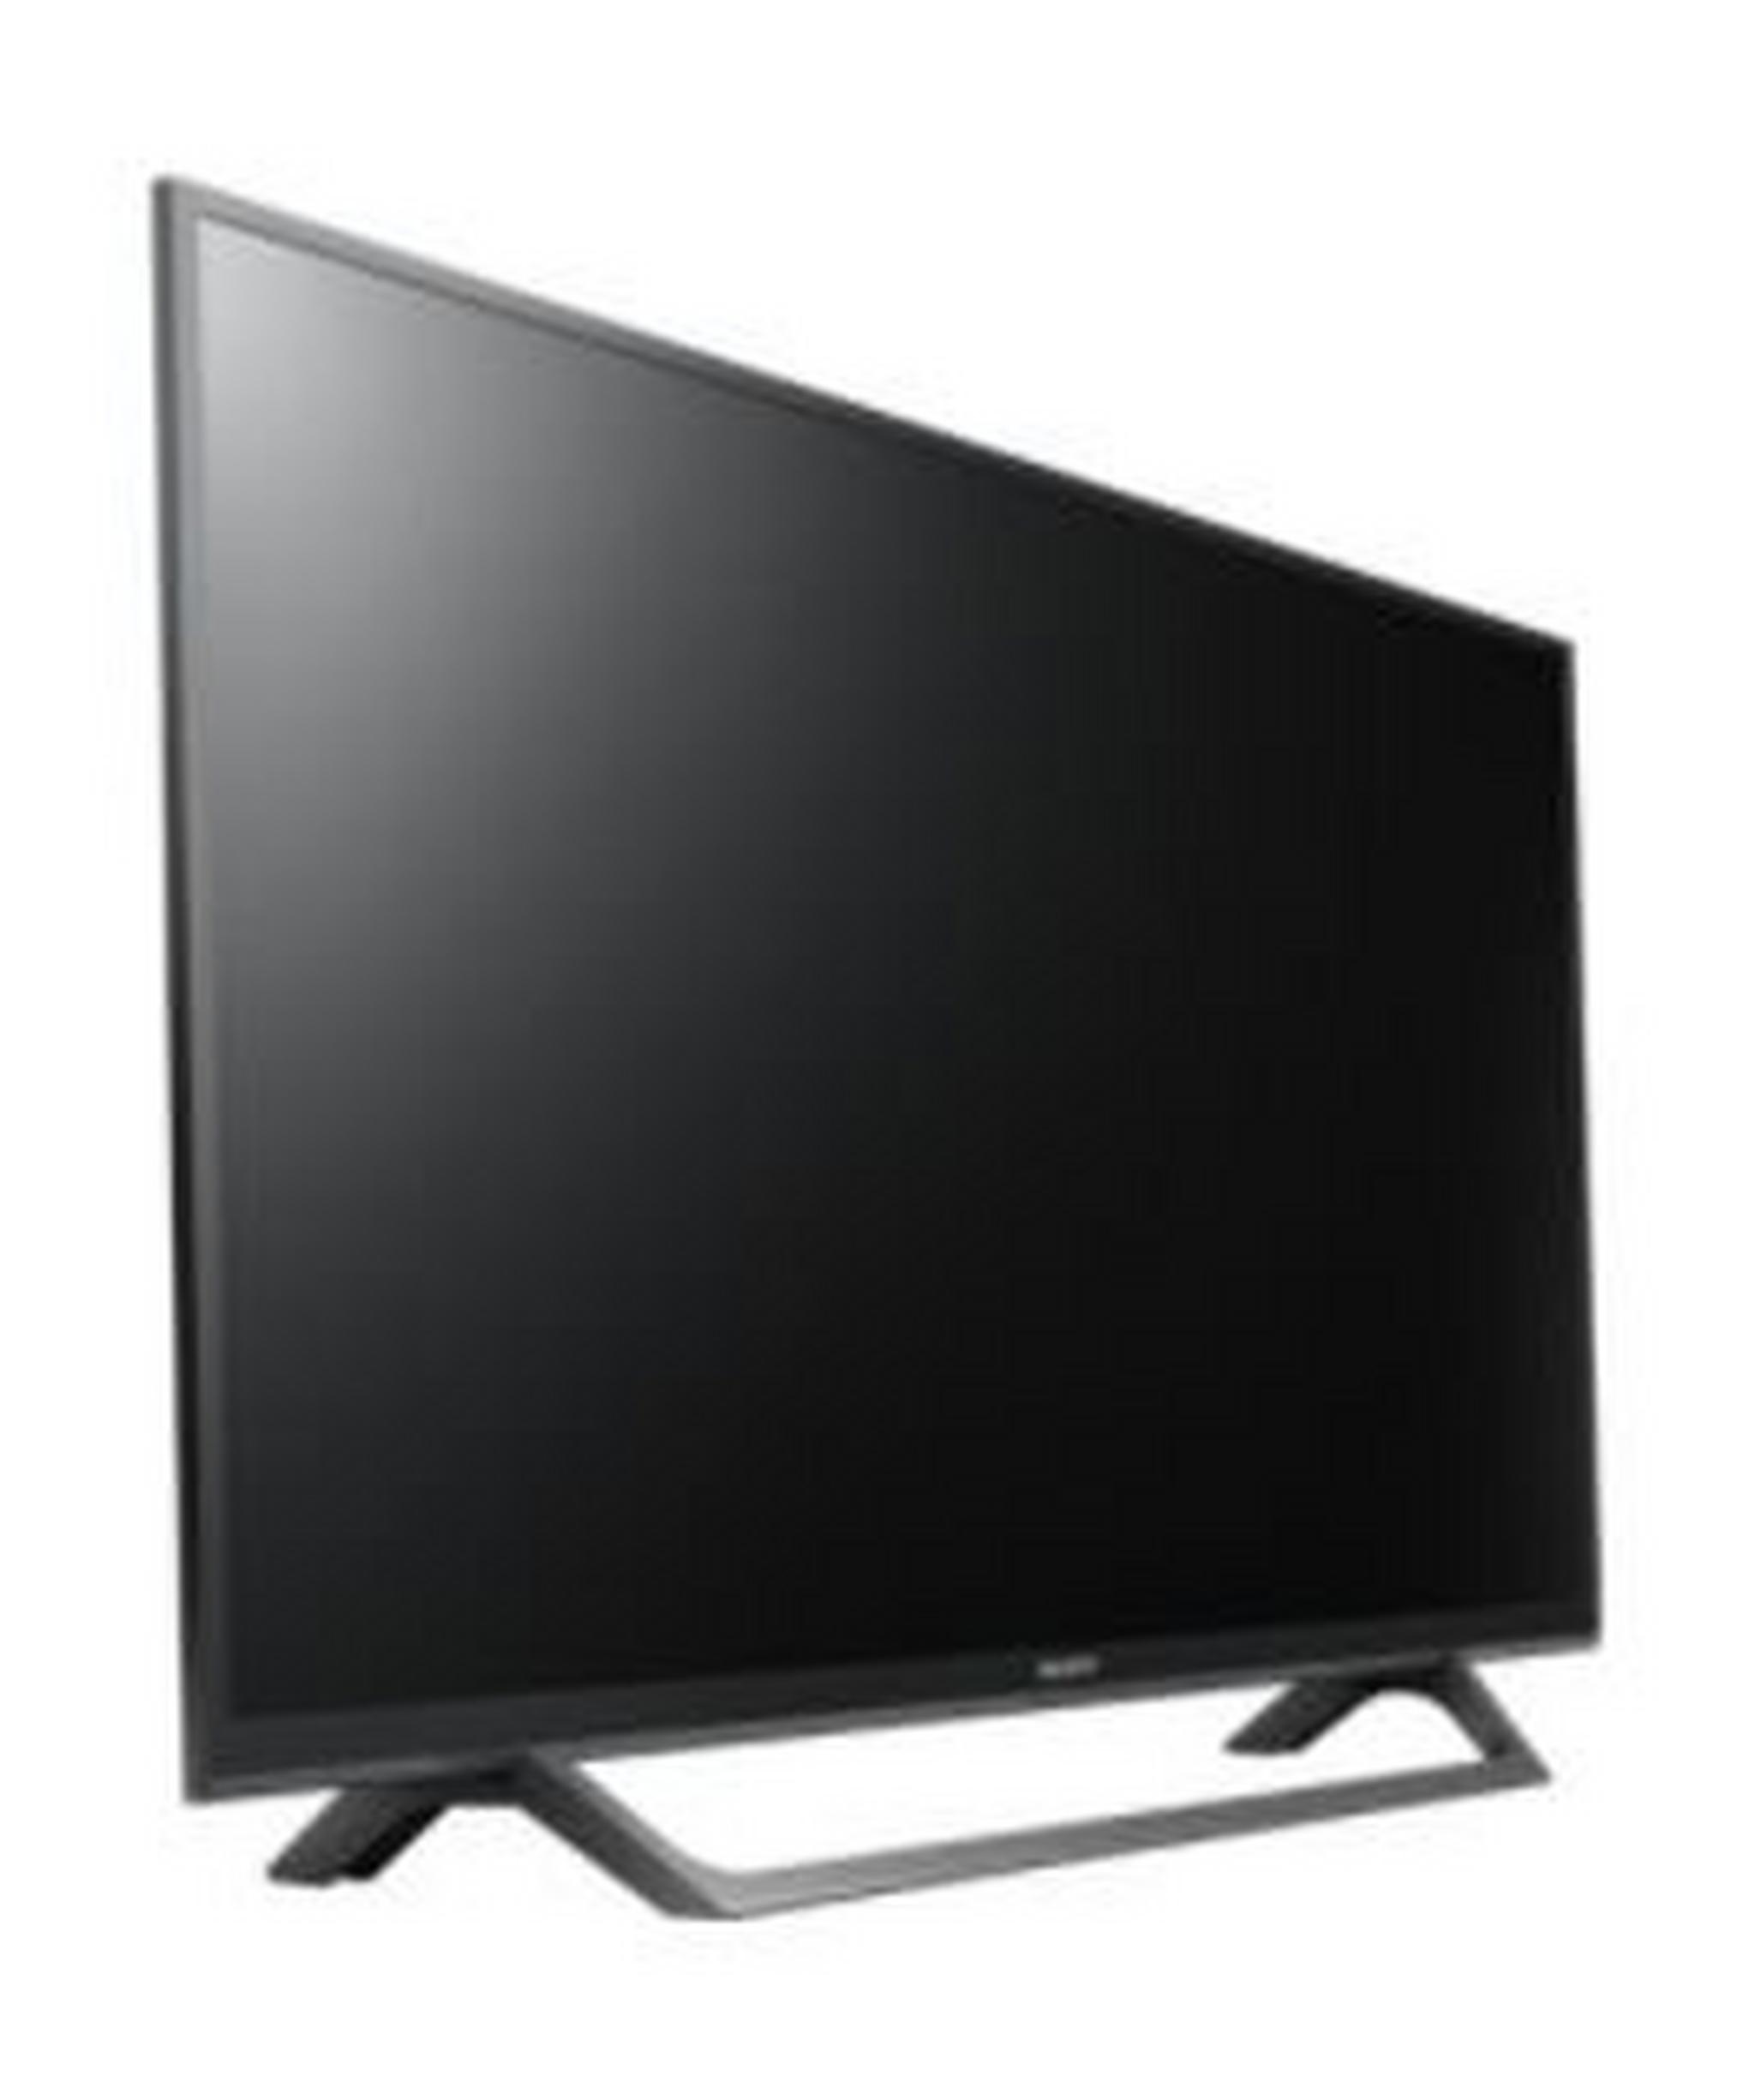 Sony 40-inch FHD Smart Led TV (KDL-40W660E) - Black